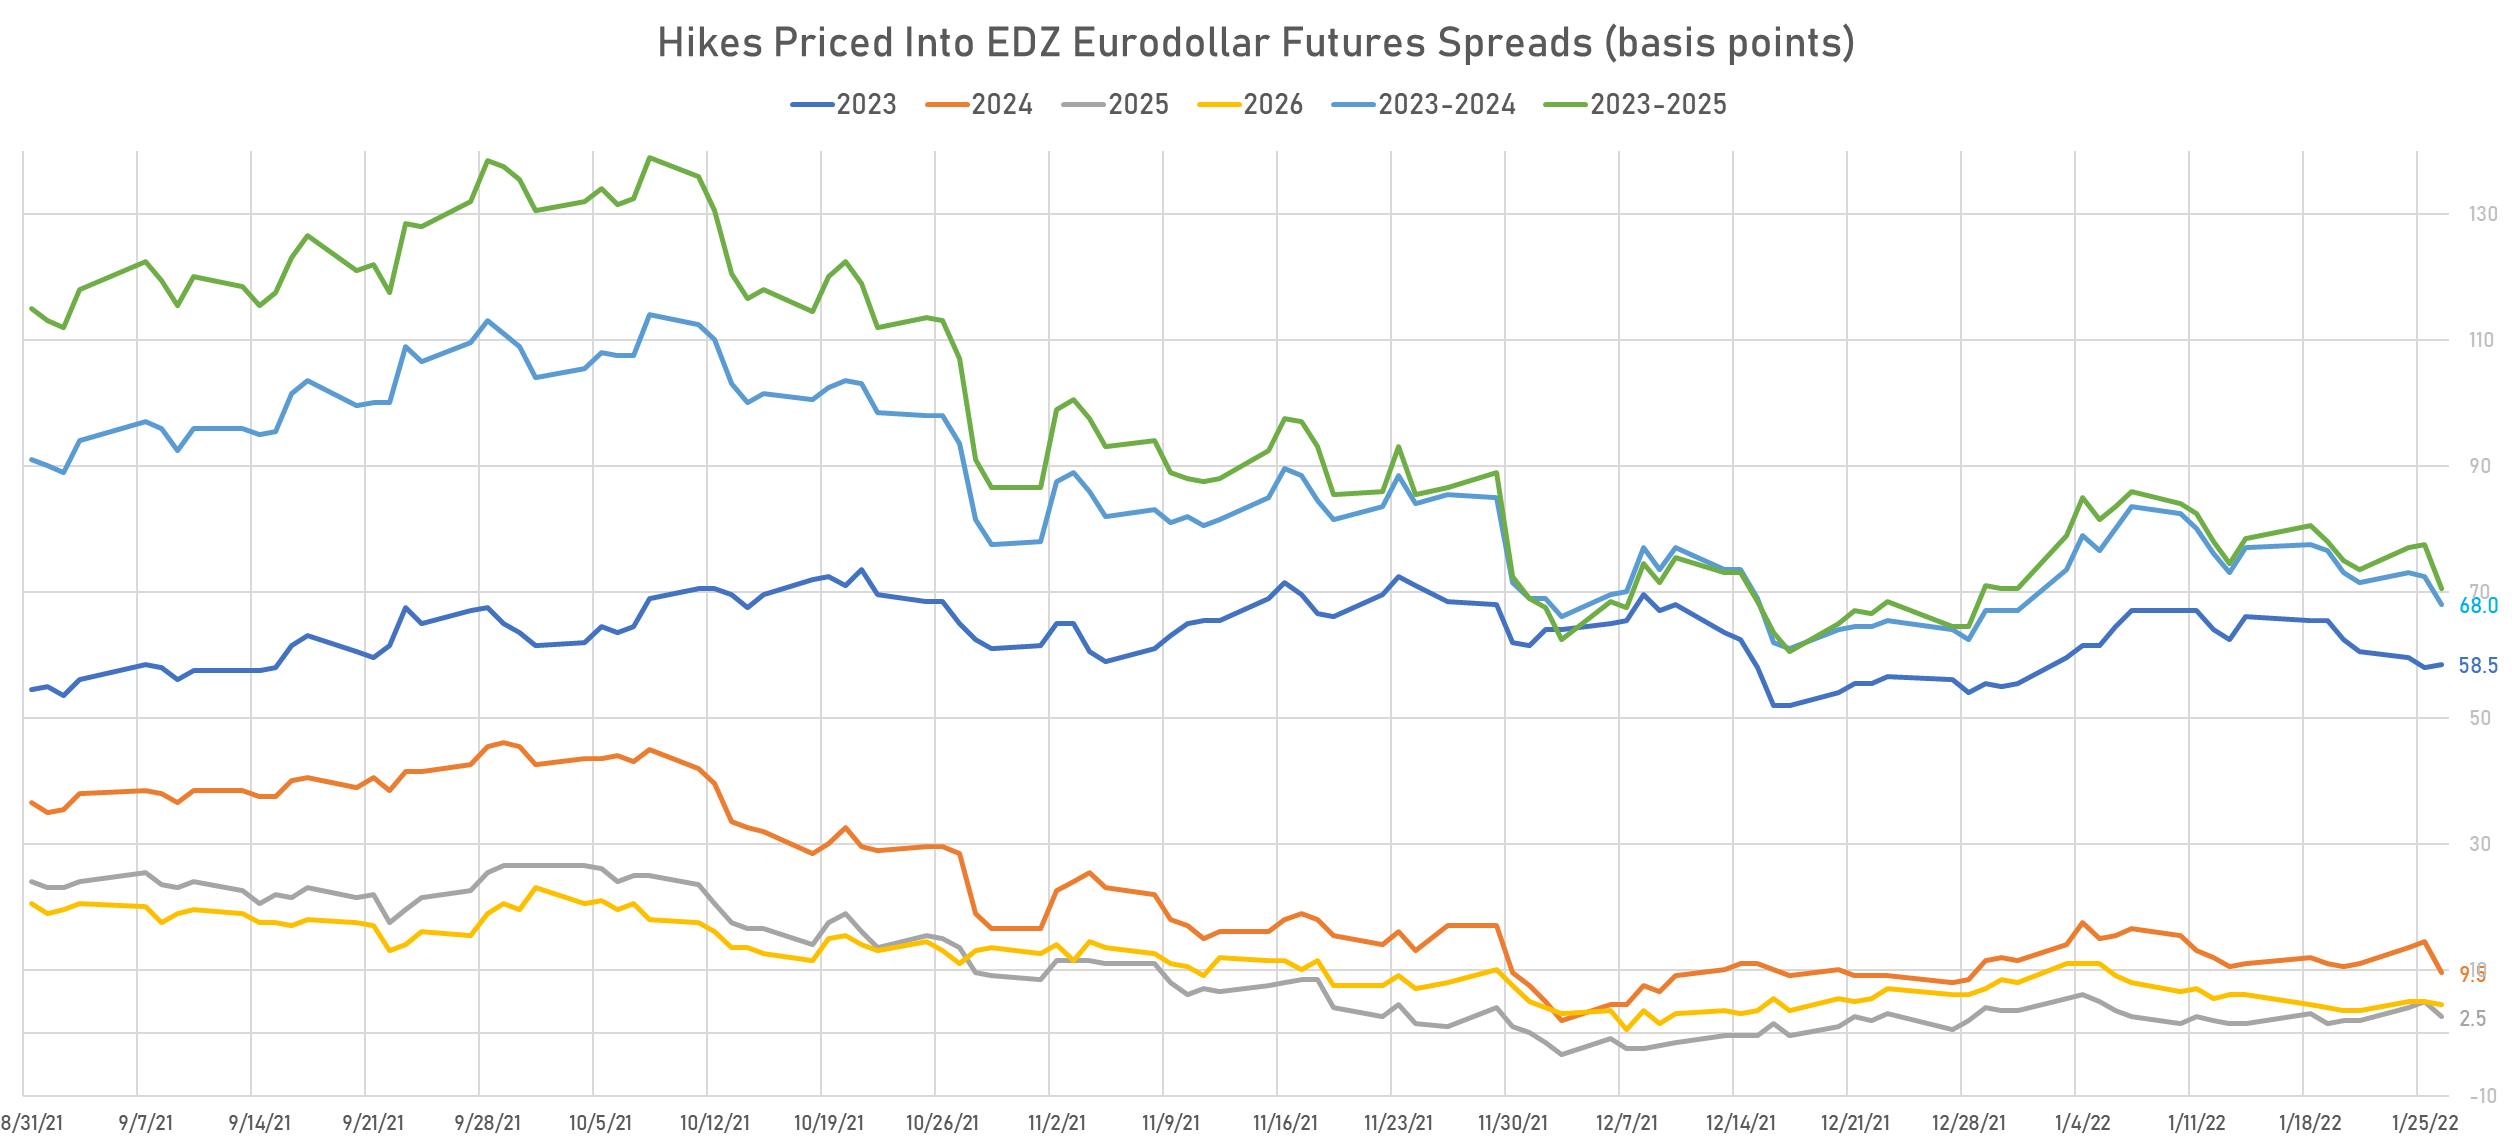 Eurodollar Futures Implied Hikes (basis points) | Sources: phipost.com, Refinitiv data